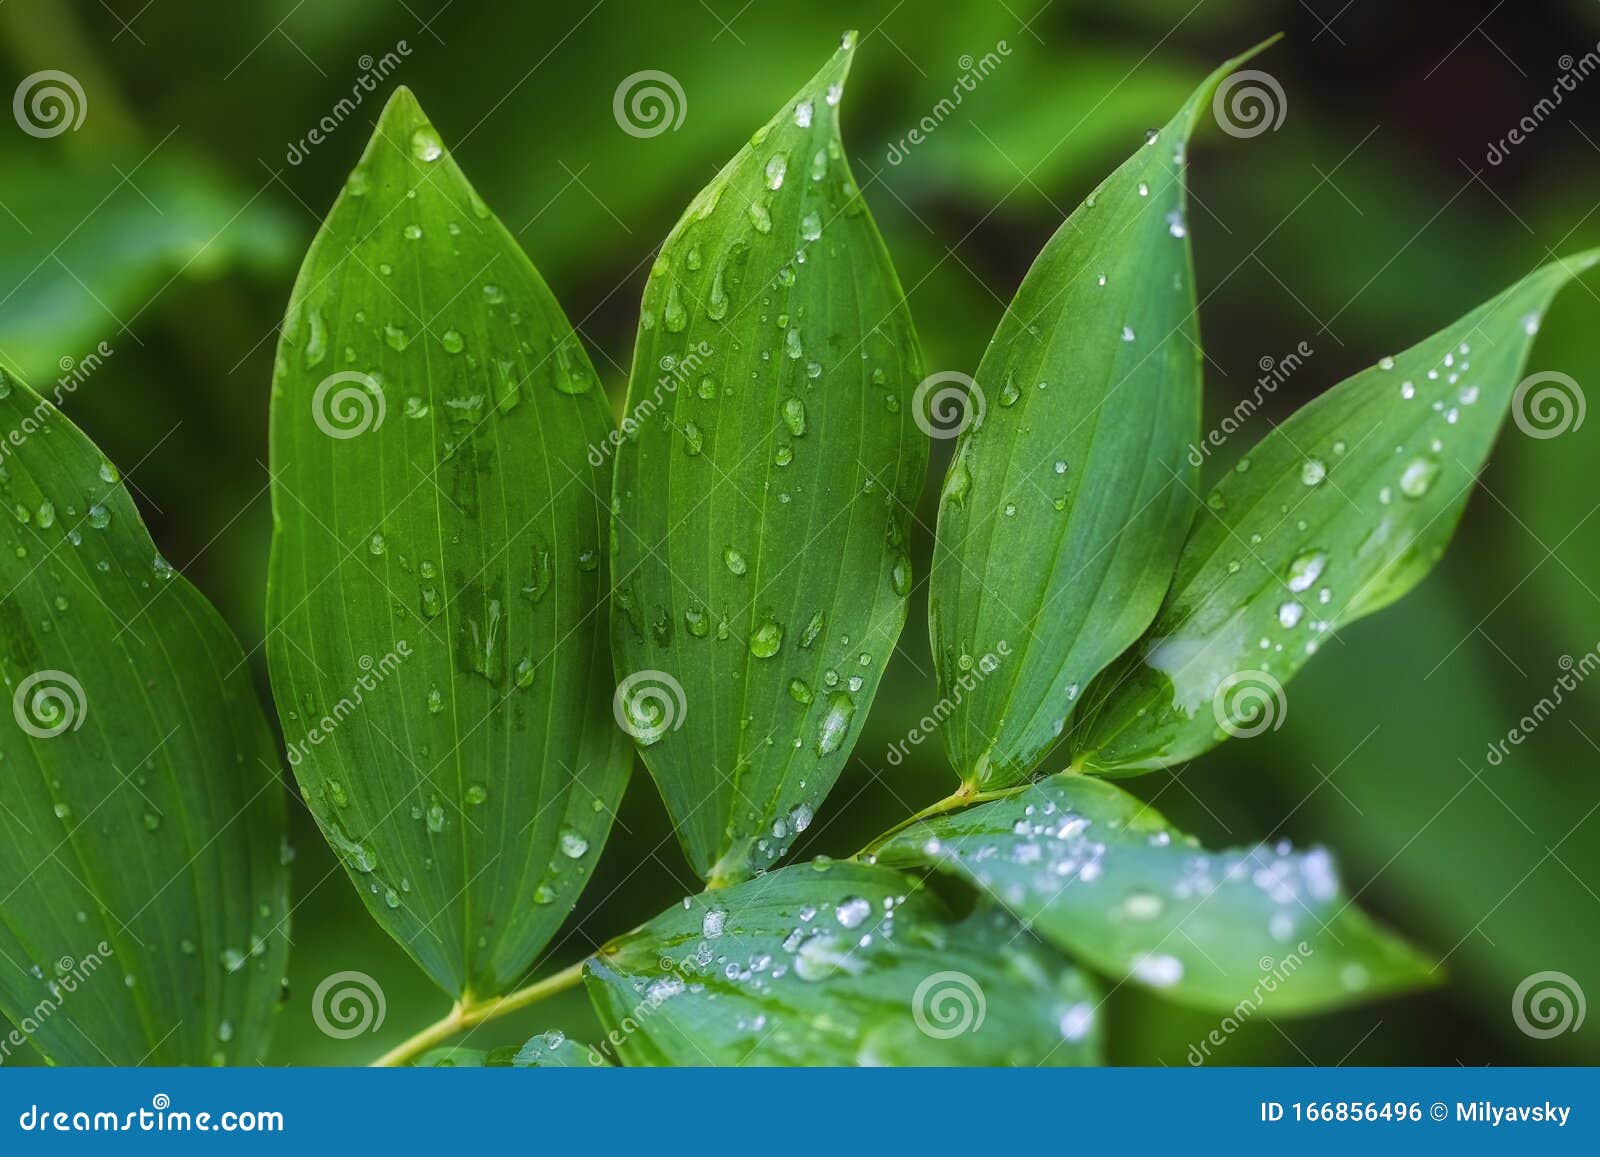 wide green leaf, plant after rain